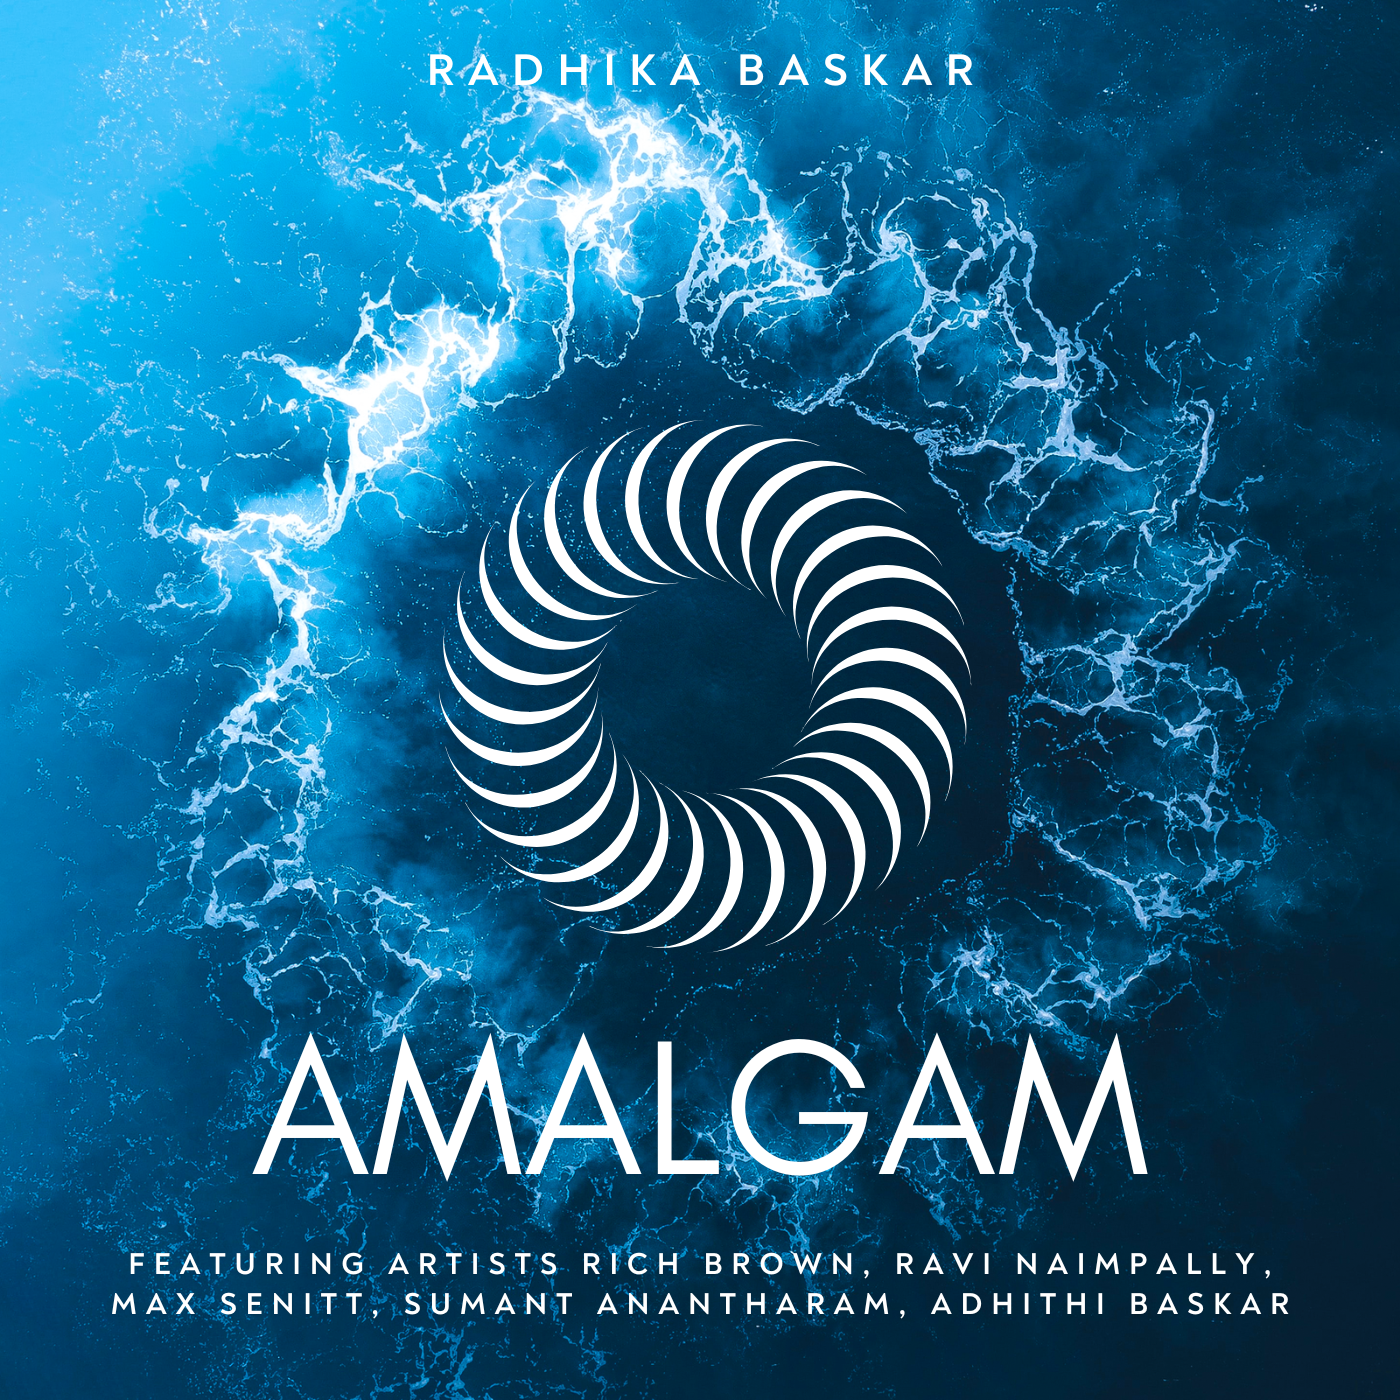 NEW MUSIC ALERT: Radhika Baskar’s latest release, AMALGAM